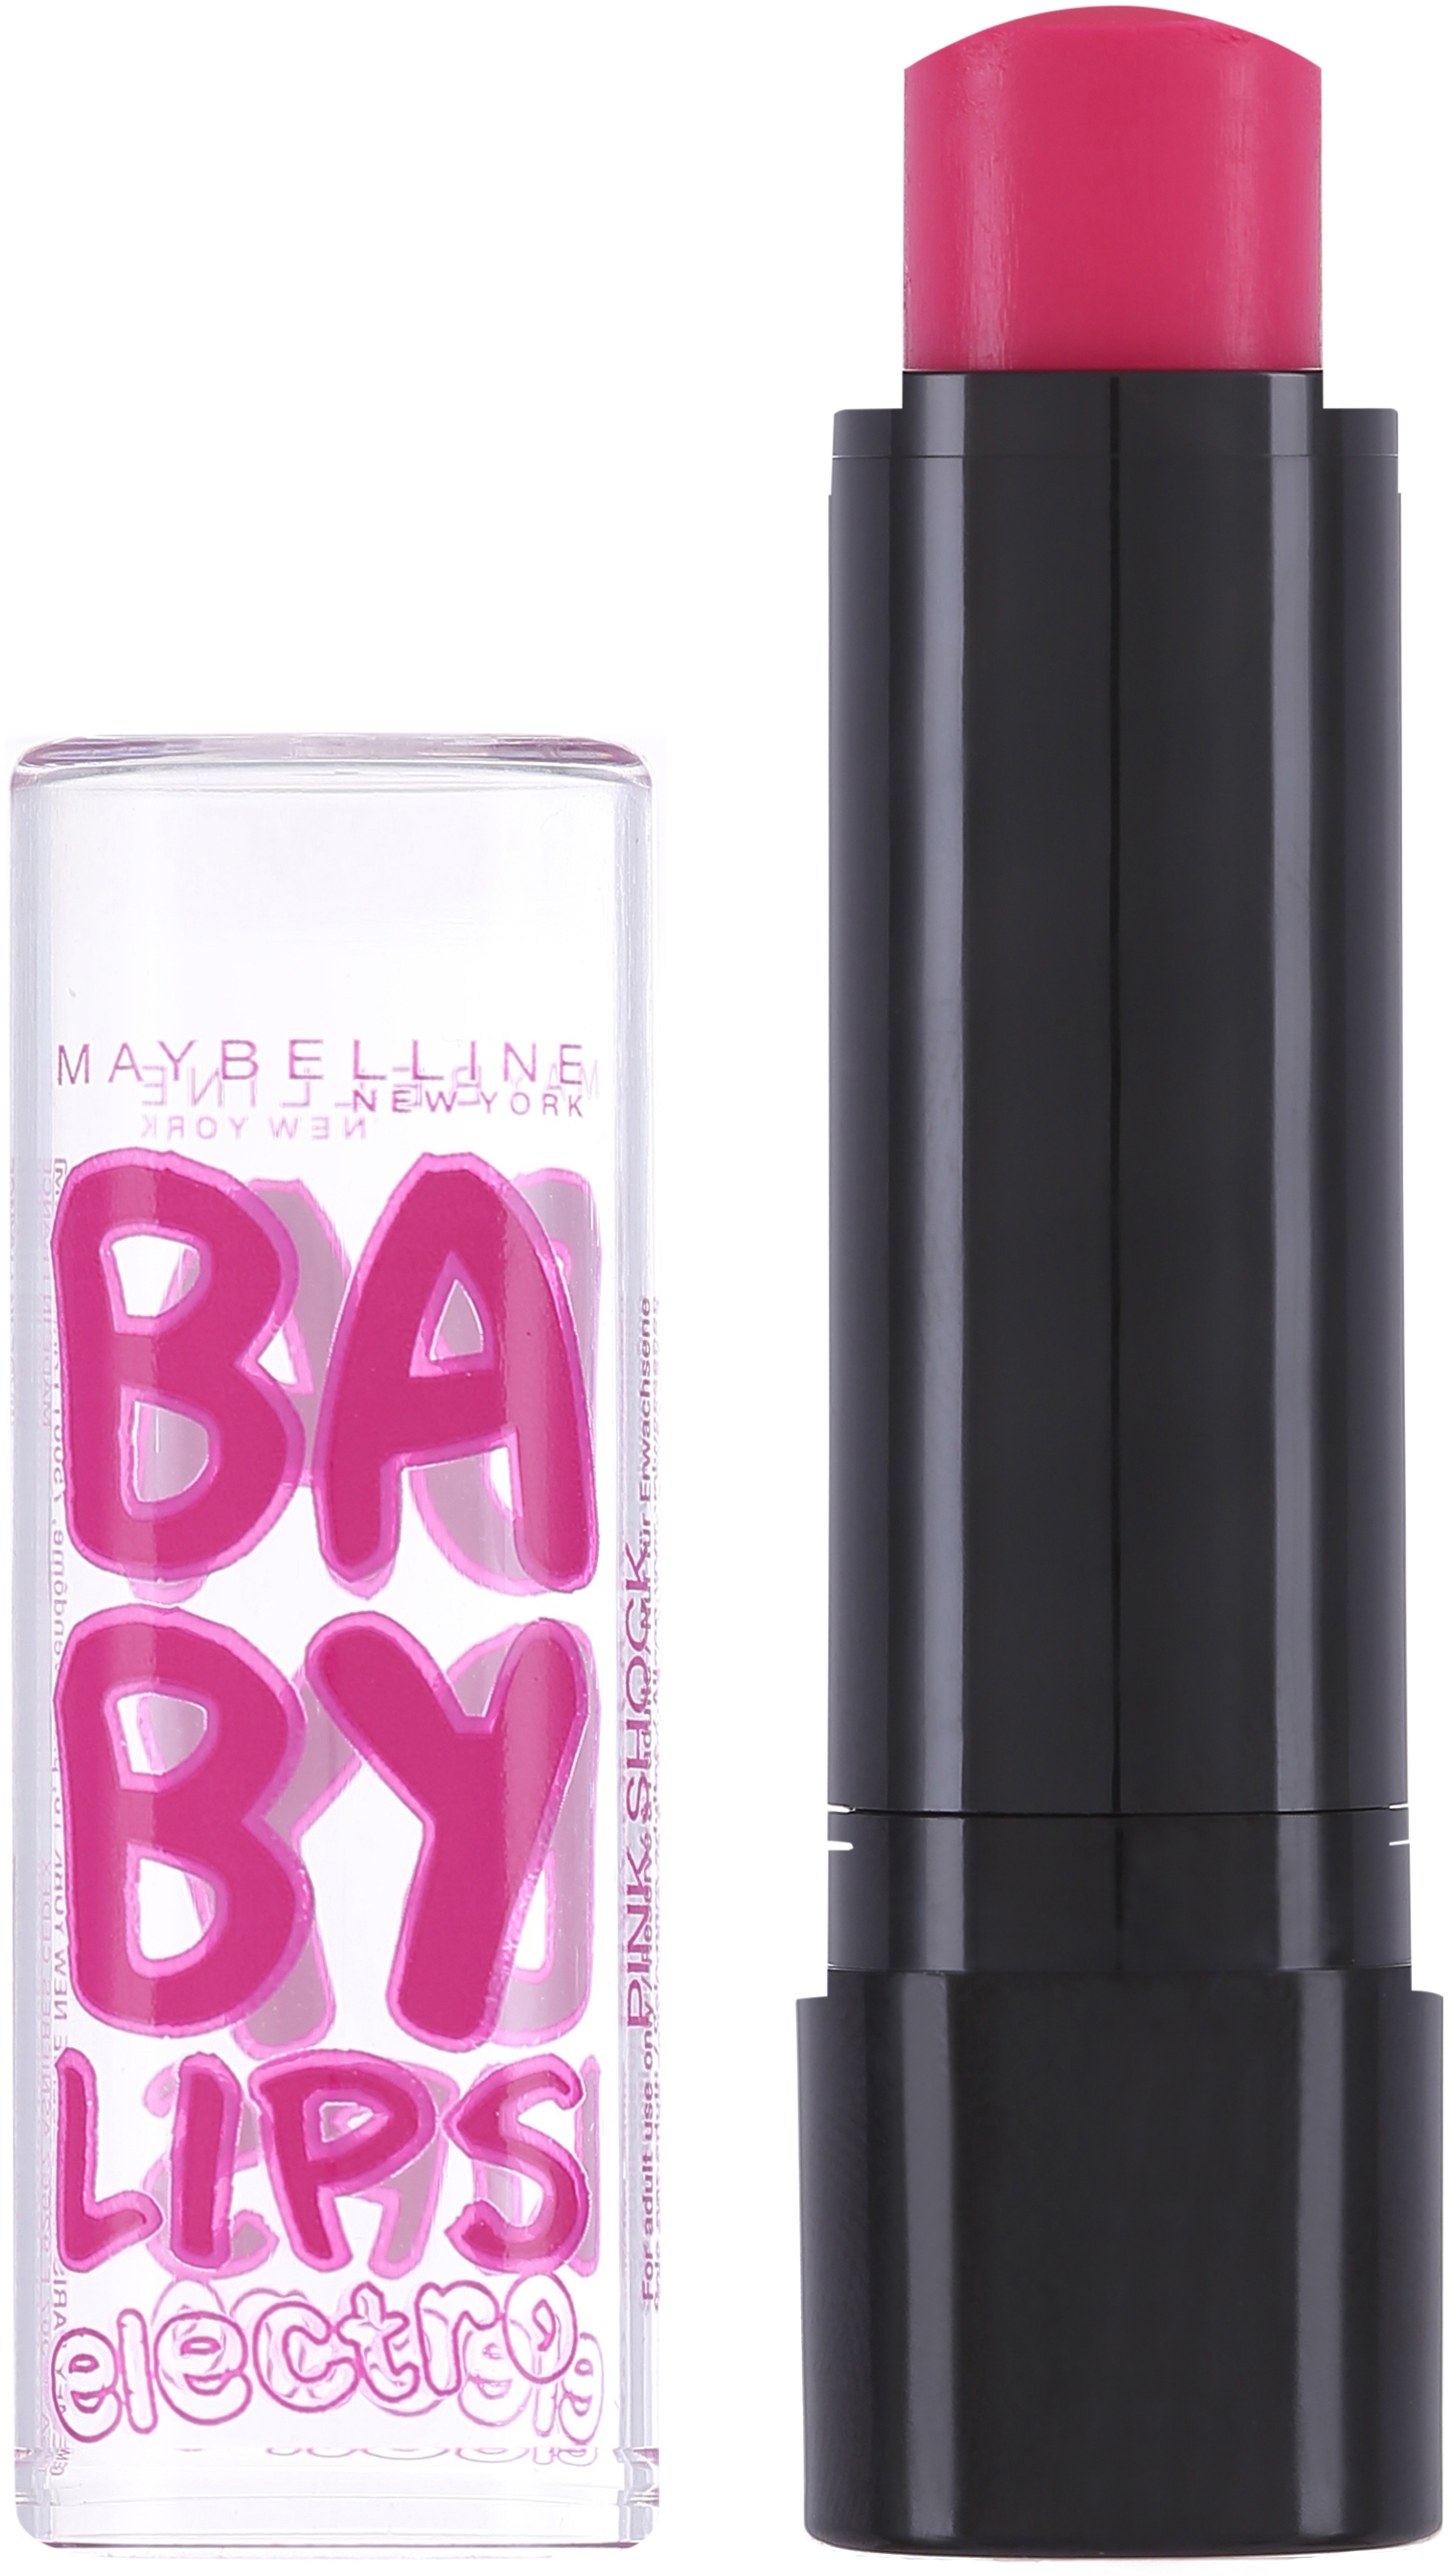 Maybelline Baby Lips Electro Pink Shock